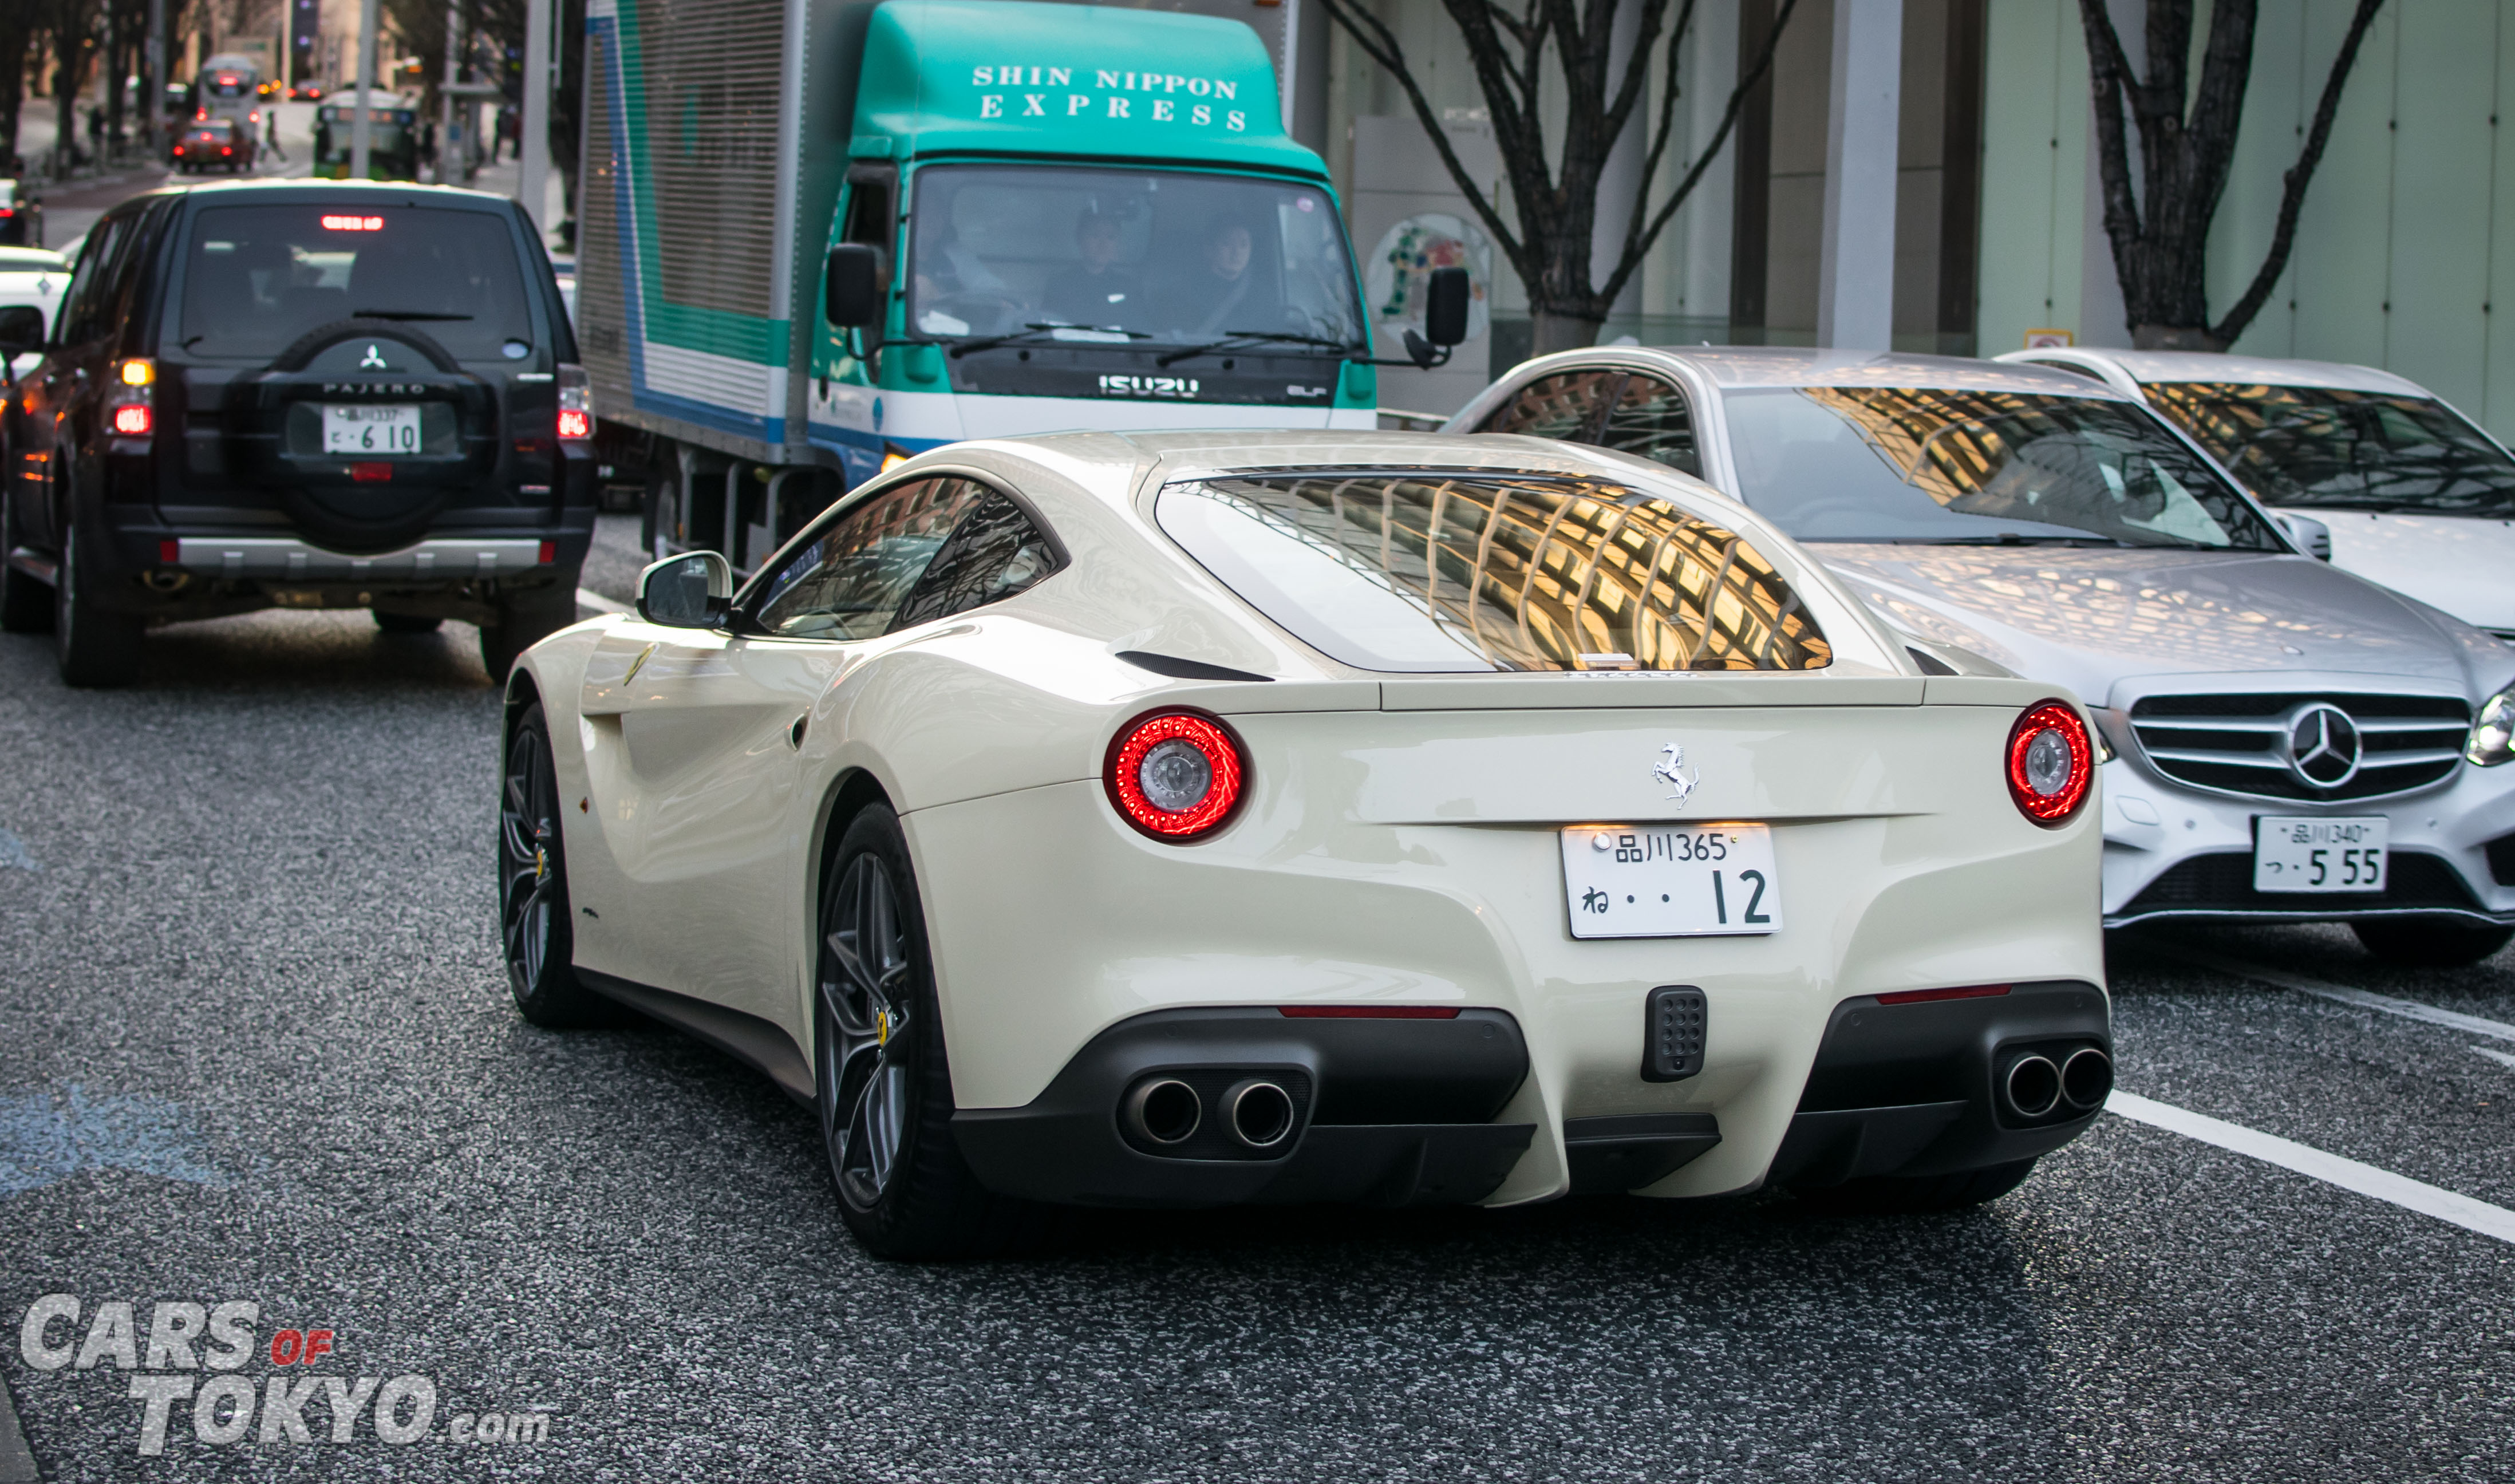 Cars of Tokyo Roppongi Ferrari F12